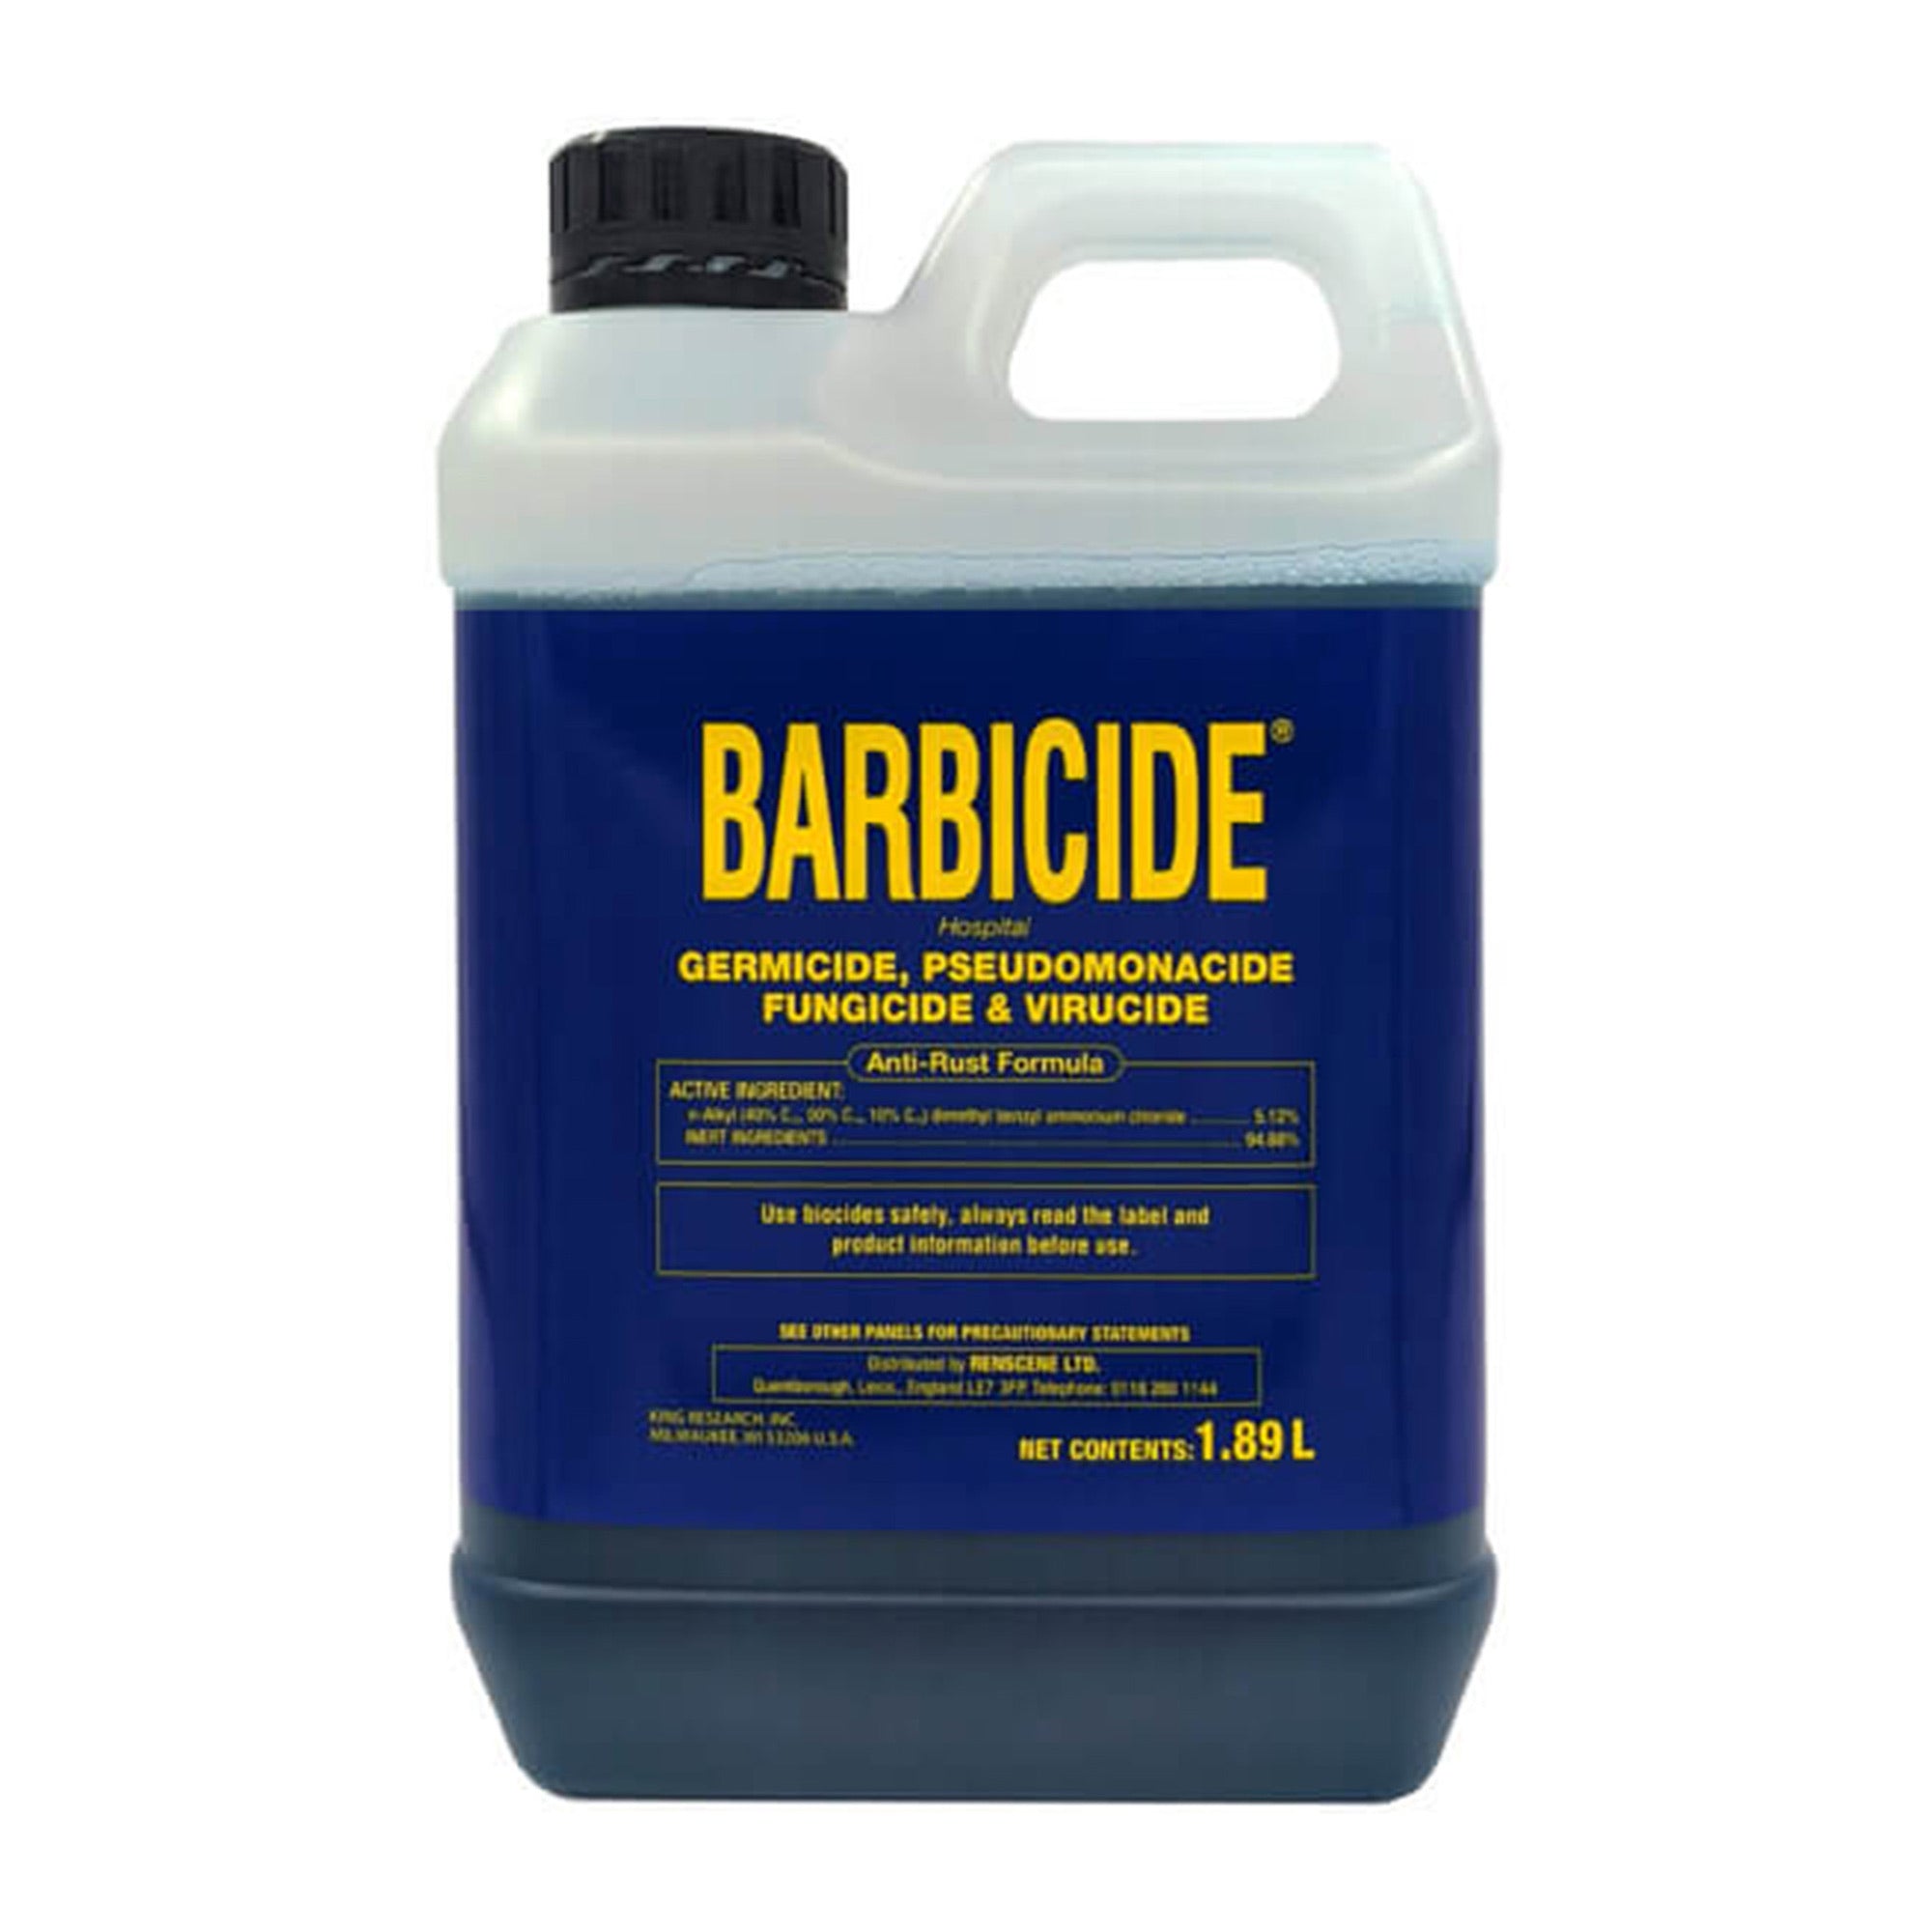 Barbicide - Hospital Disinfectant Concentrate Solution 1.89L - Eson Direct